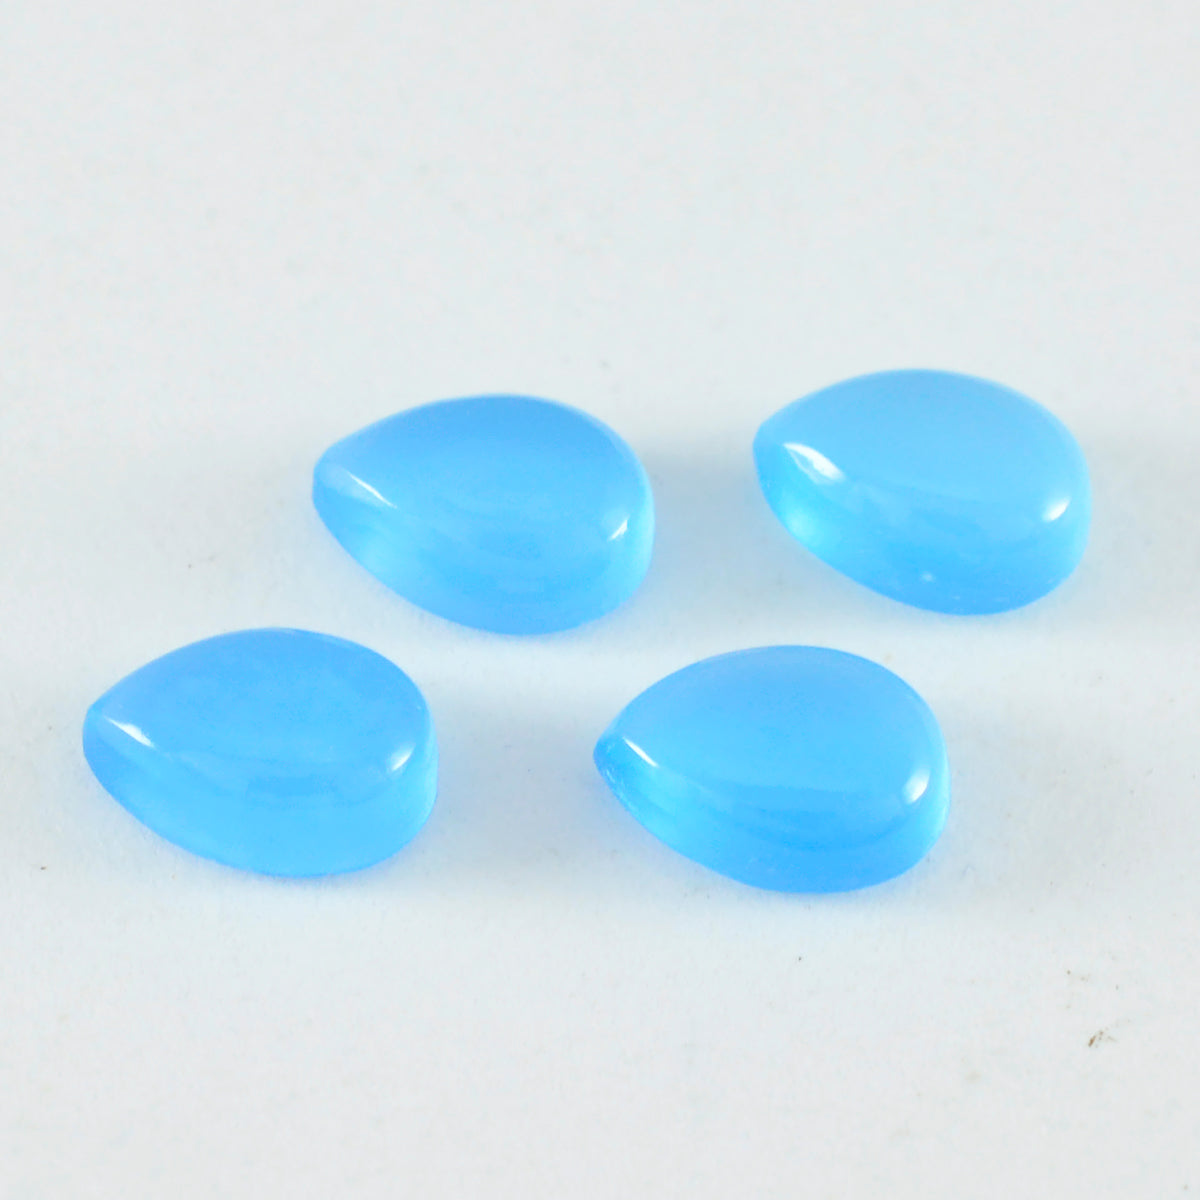 Riyogems 1 cabujón de calcedonia azul, 7x10 mm, forma de pera, piedra suelta de calidad A+